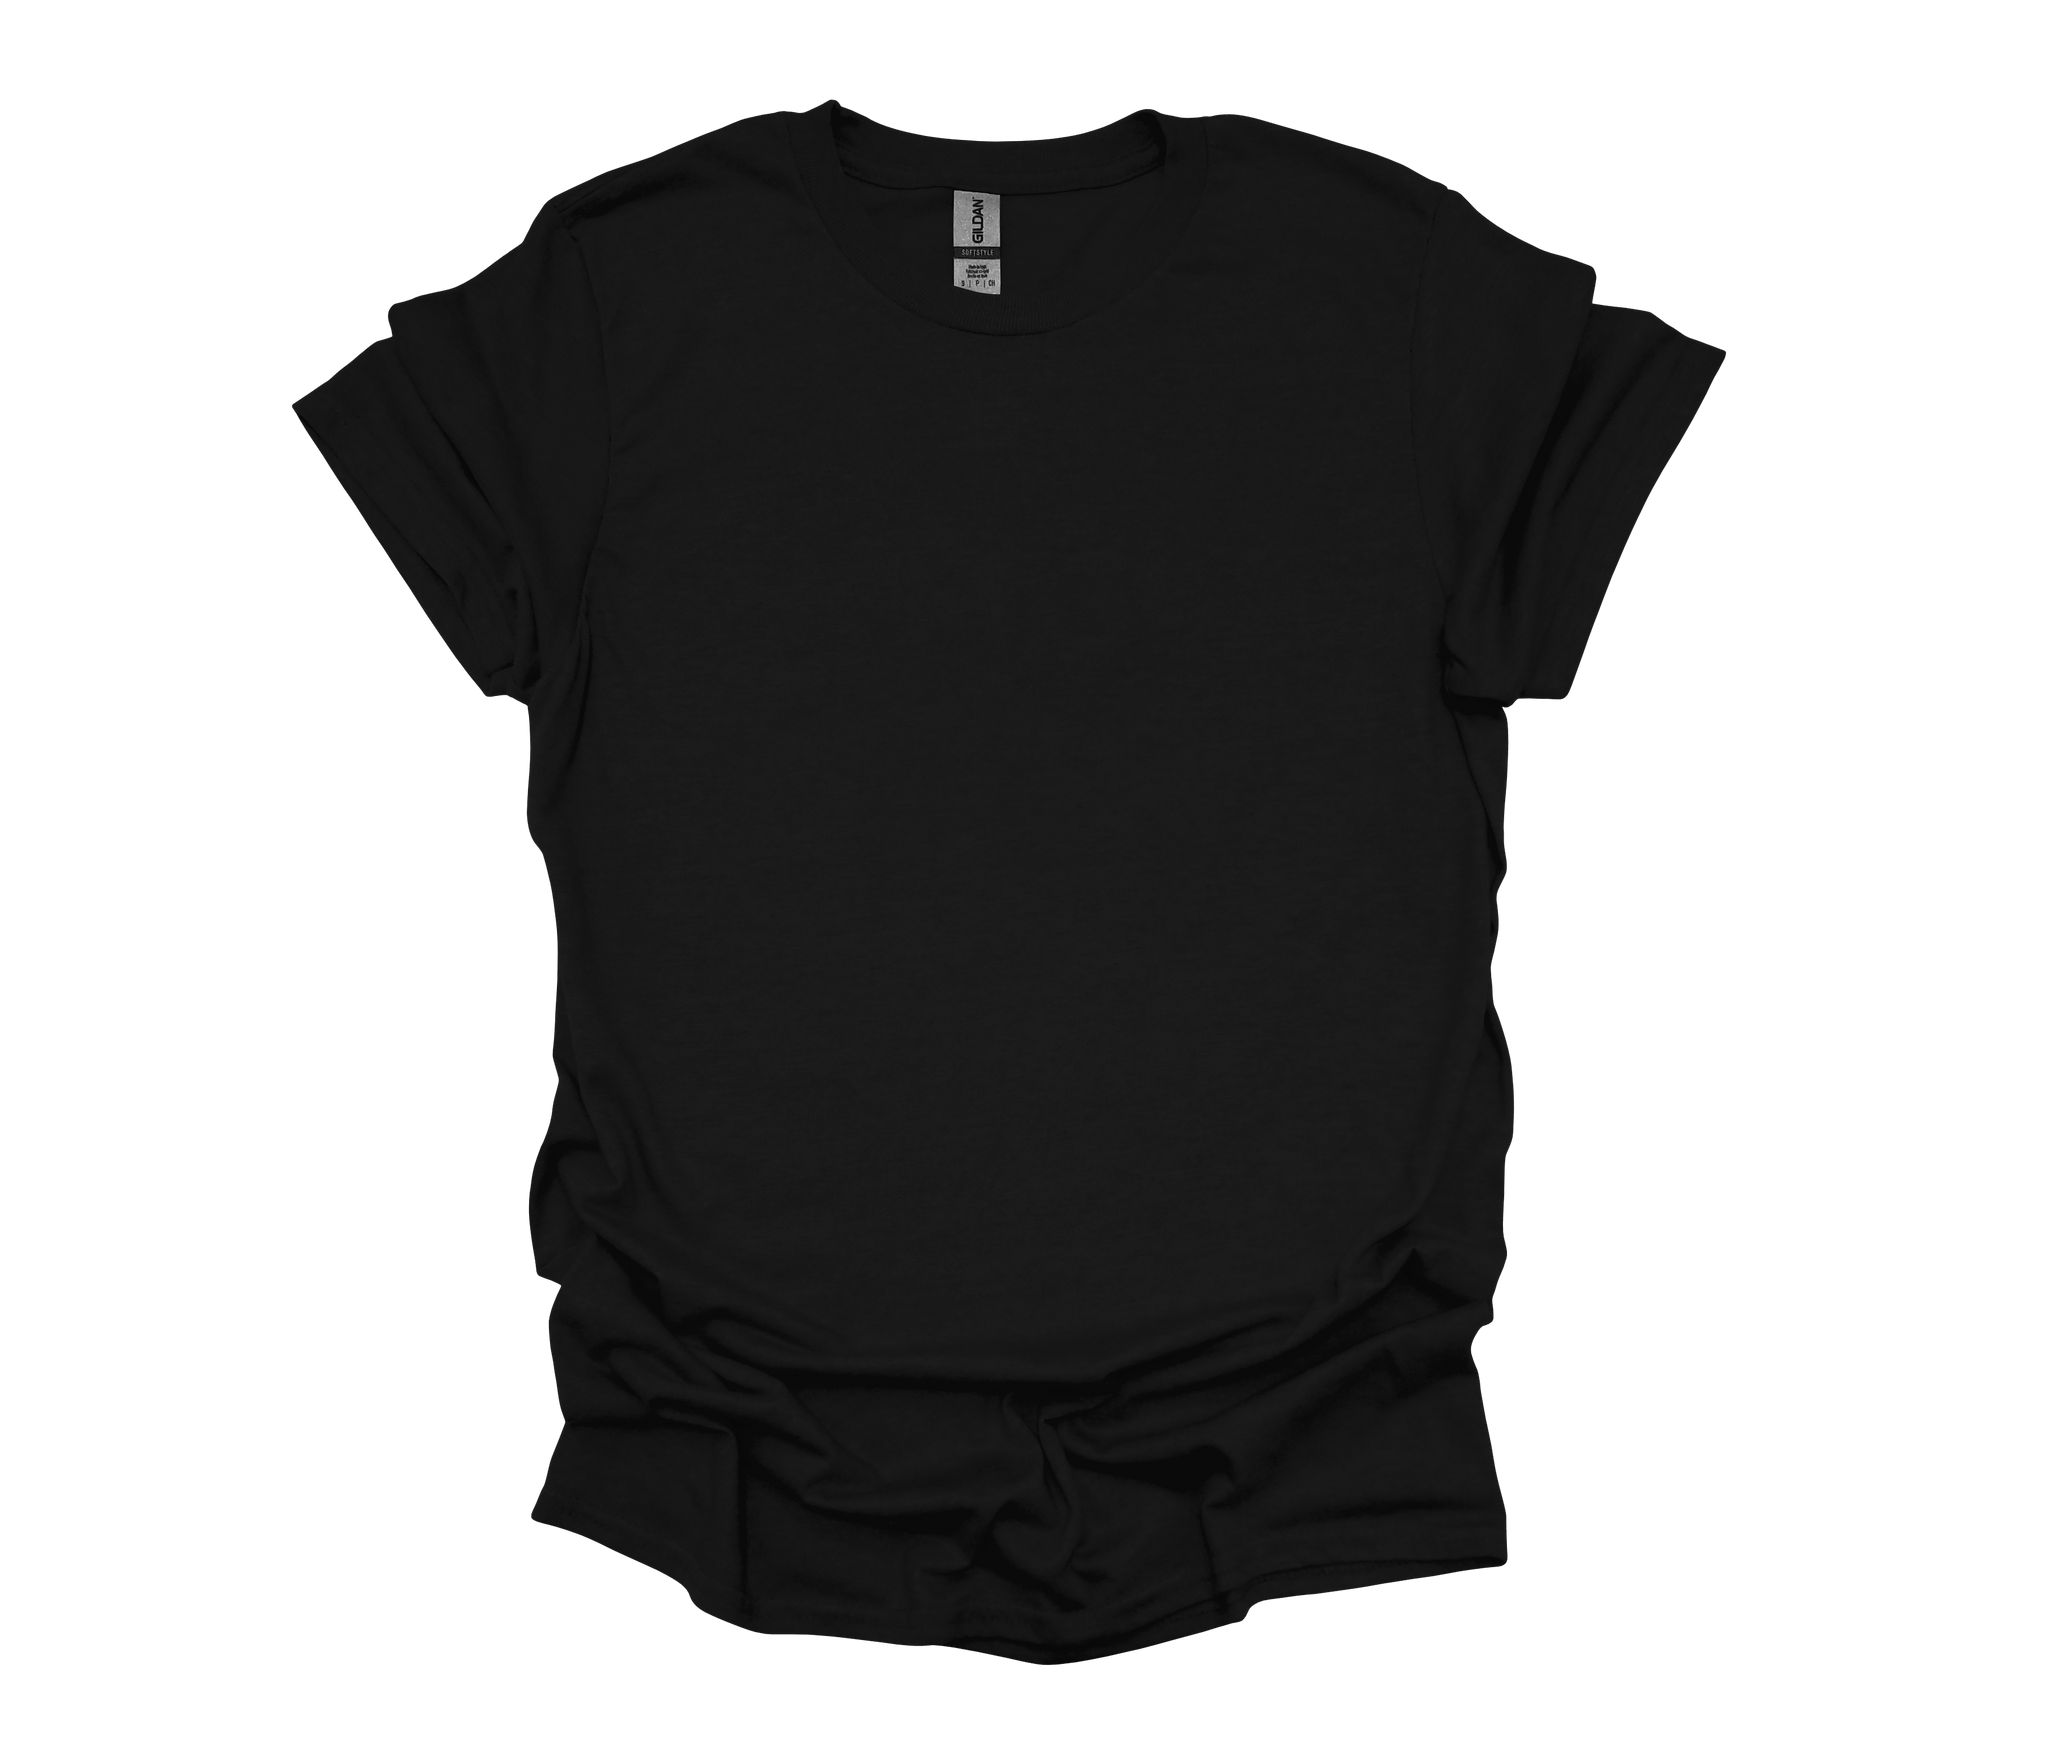 Gildan Softstyle Adult Unisex T-Shirt